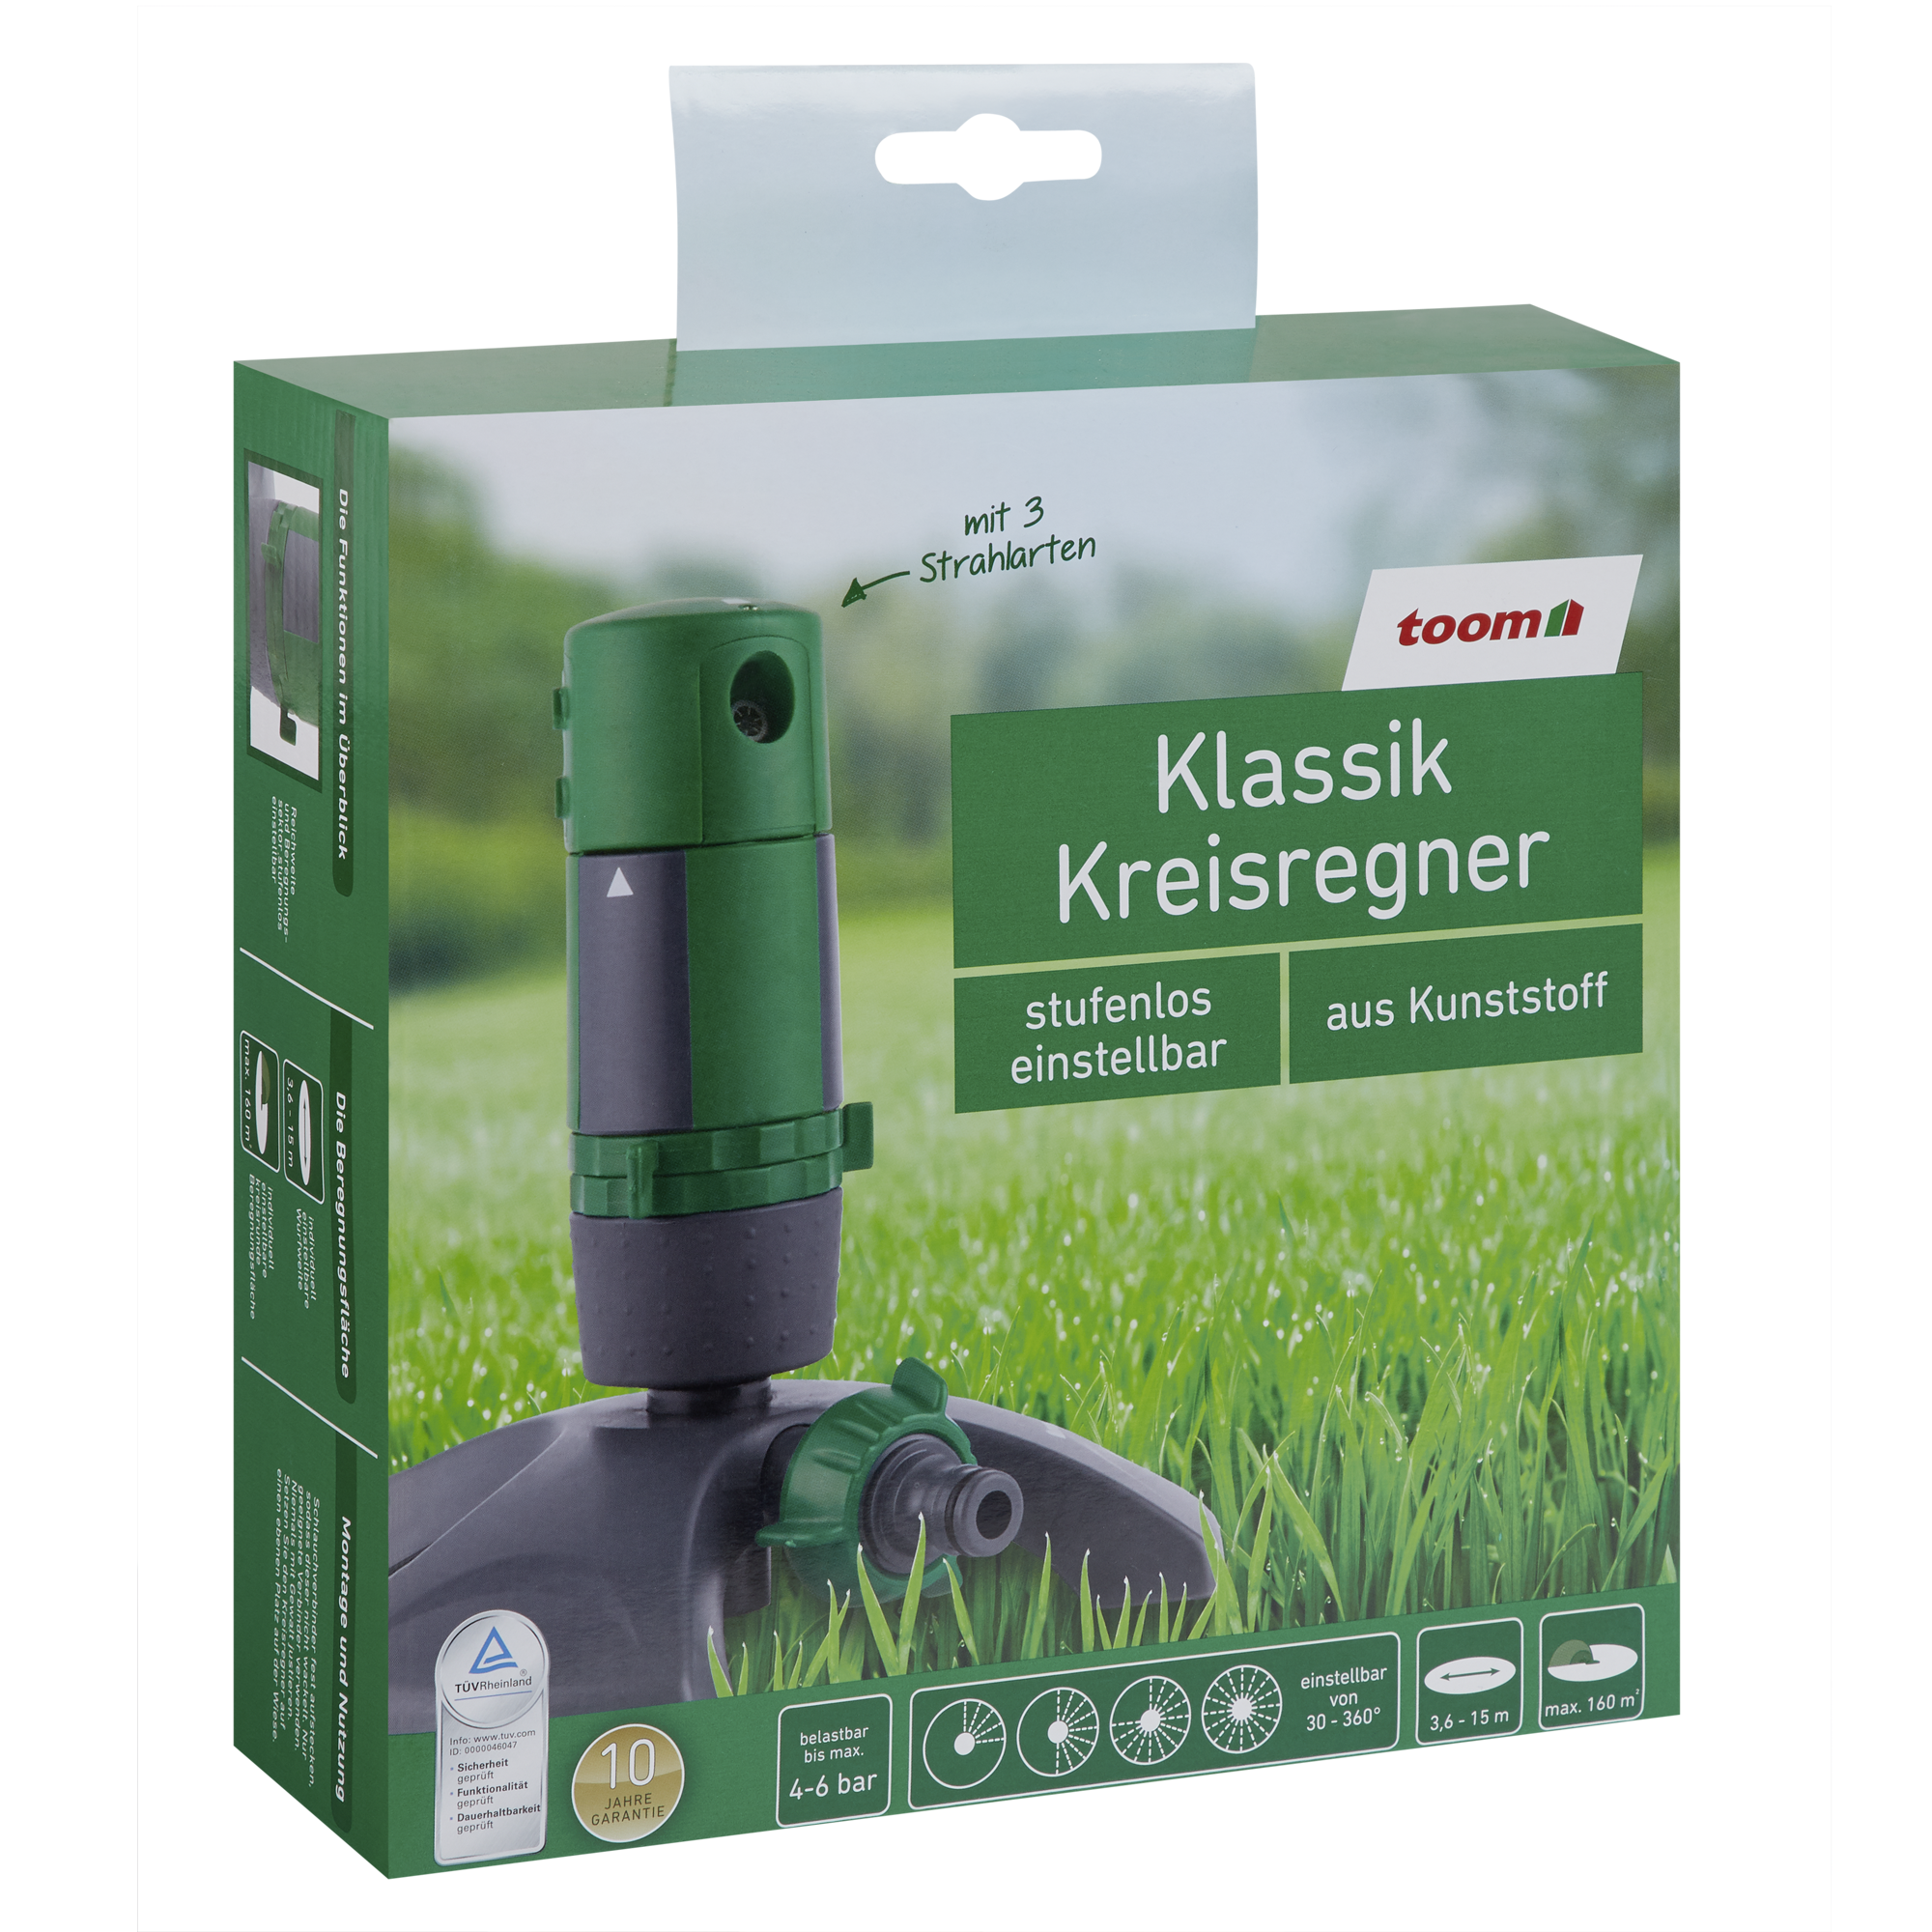 Kreisregner 'Klassik', mit 3 Strahlarten + product picture